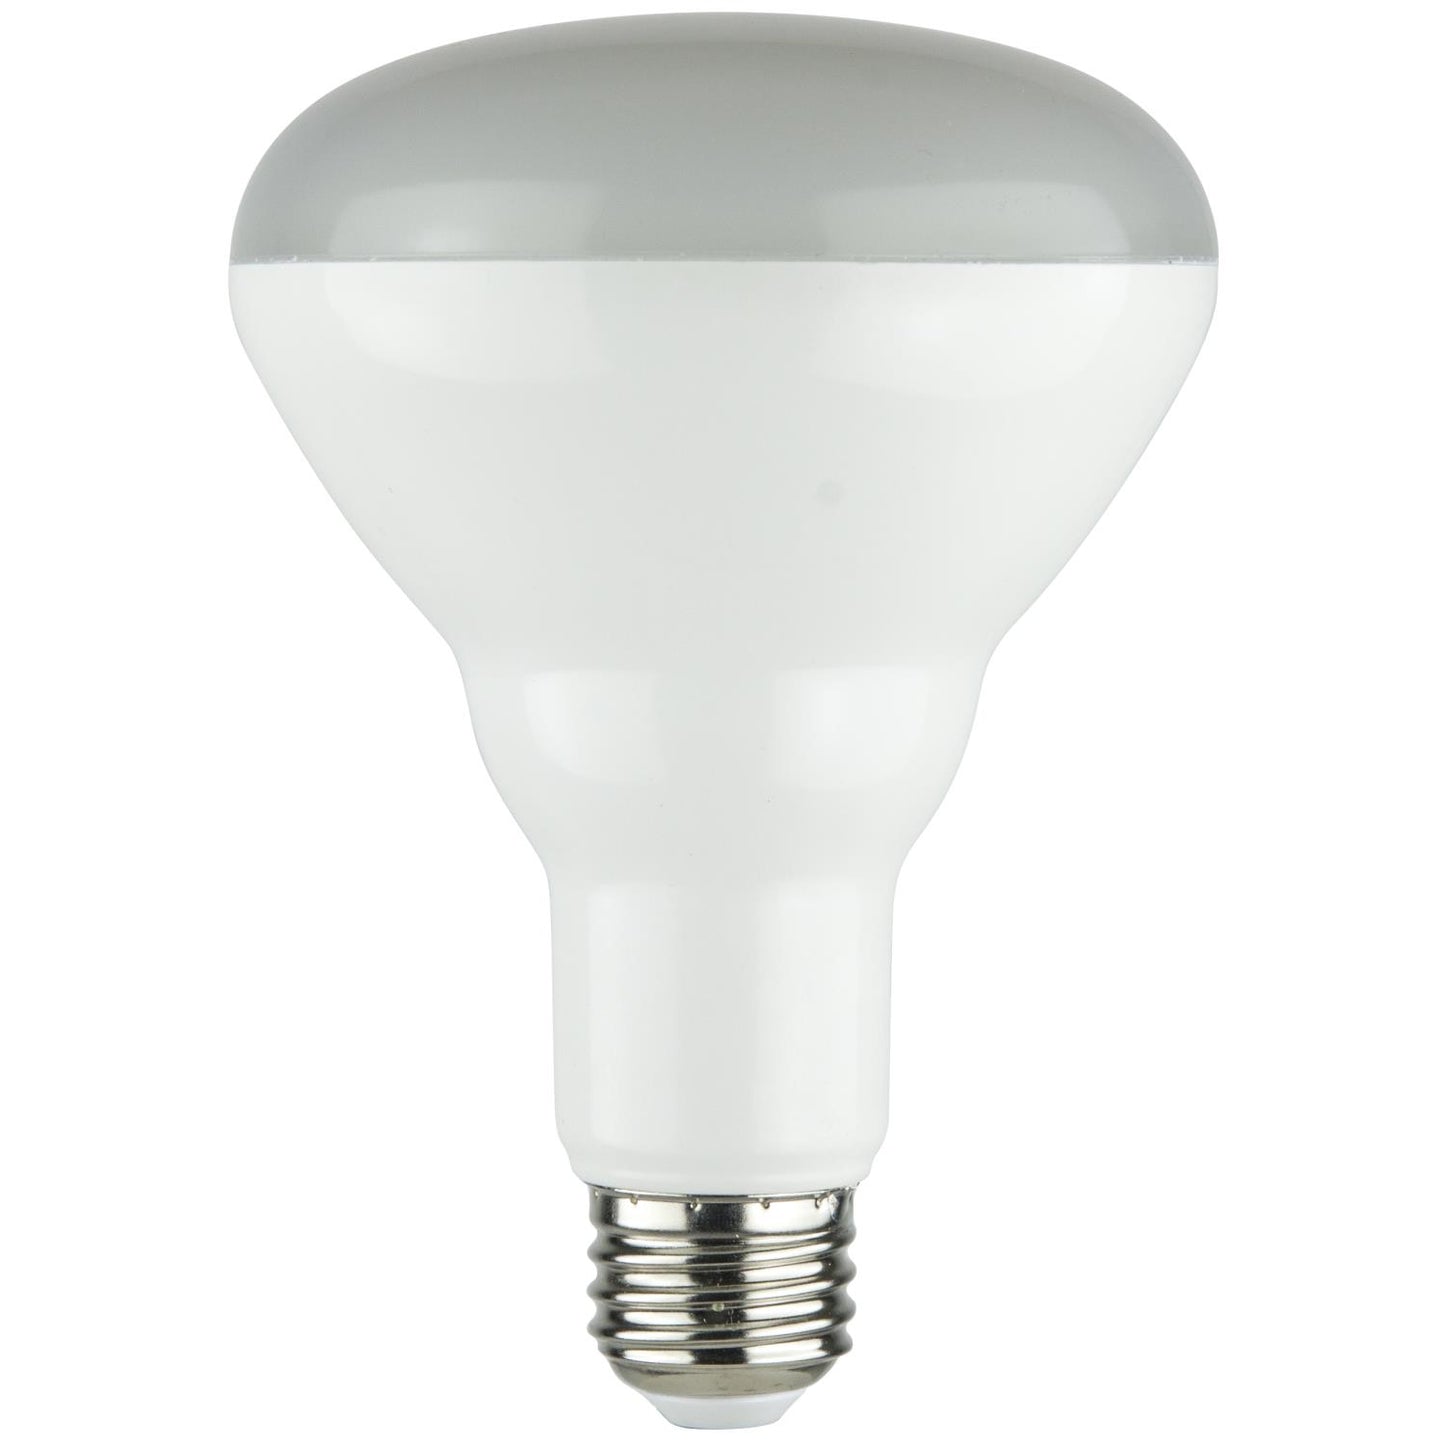 Sunlite LED BR30 Reflector 12W (65W Equivalent) Light Bulb Medium (E26) Base, Daylight